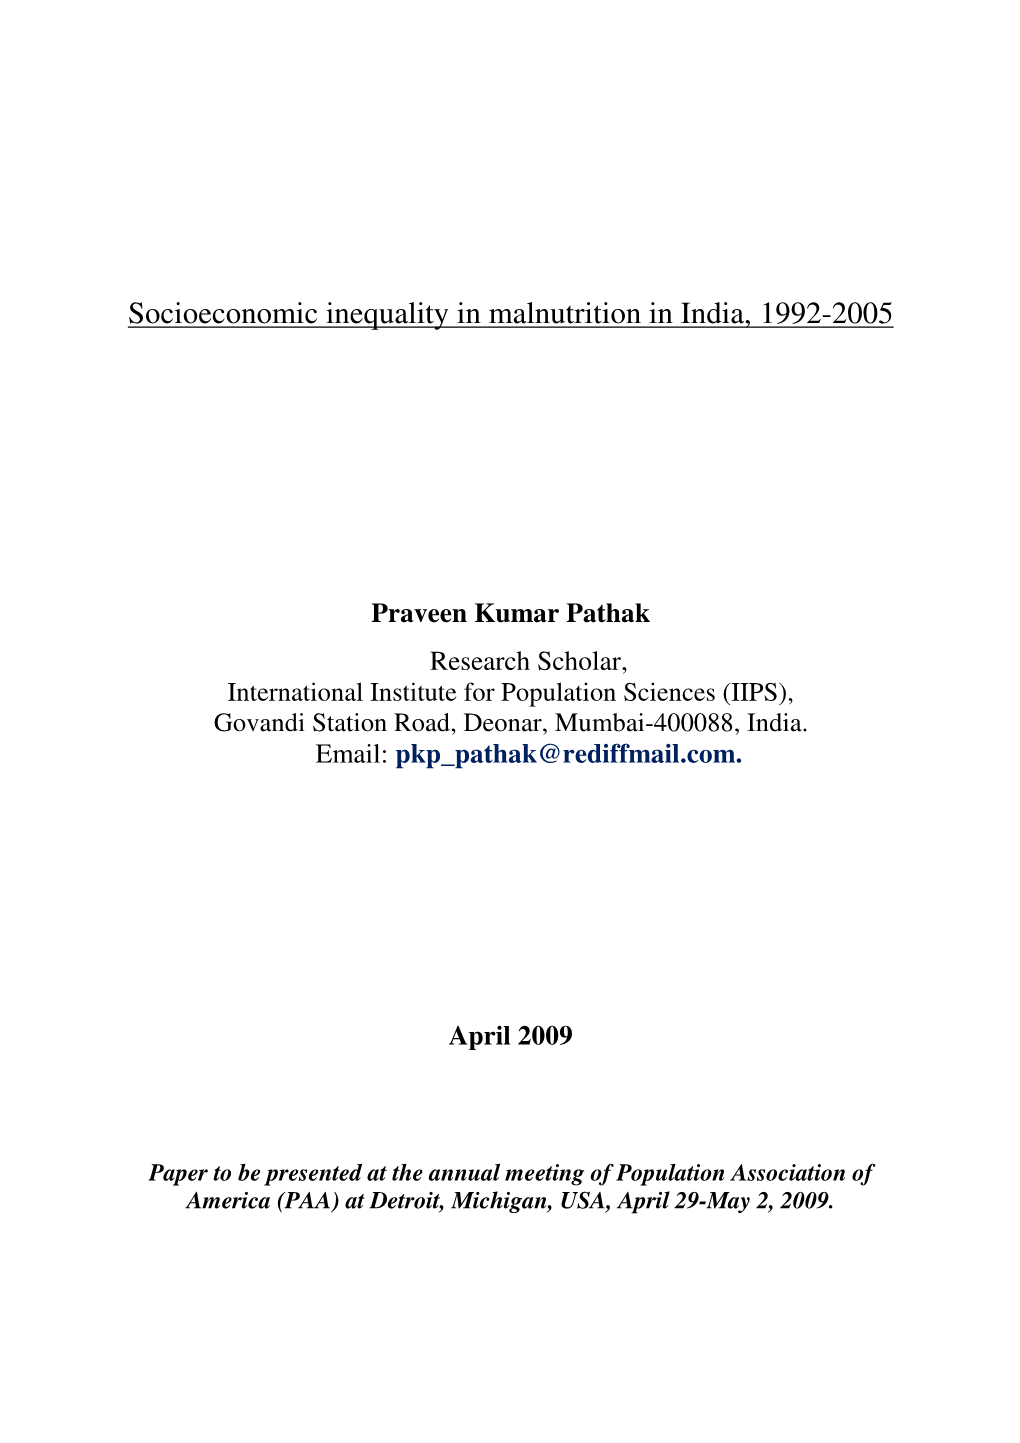 Socioeconomic Inequality in Malnutrition in India, 1992-2005